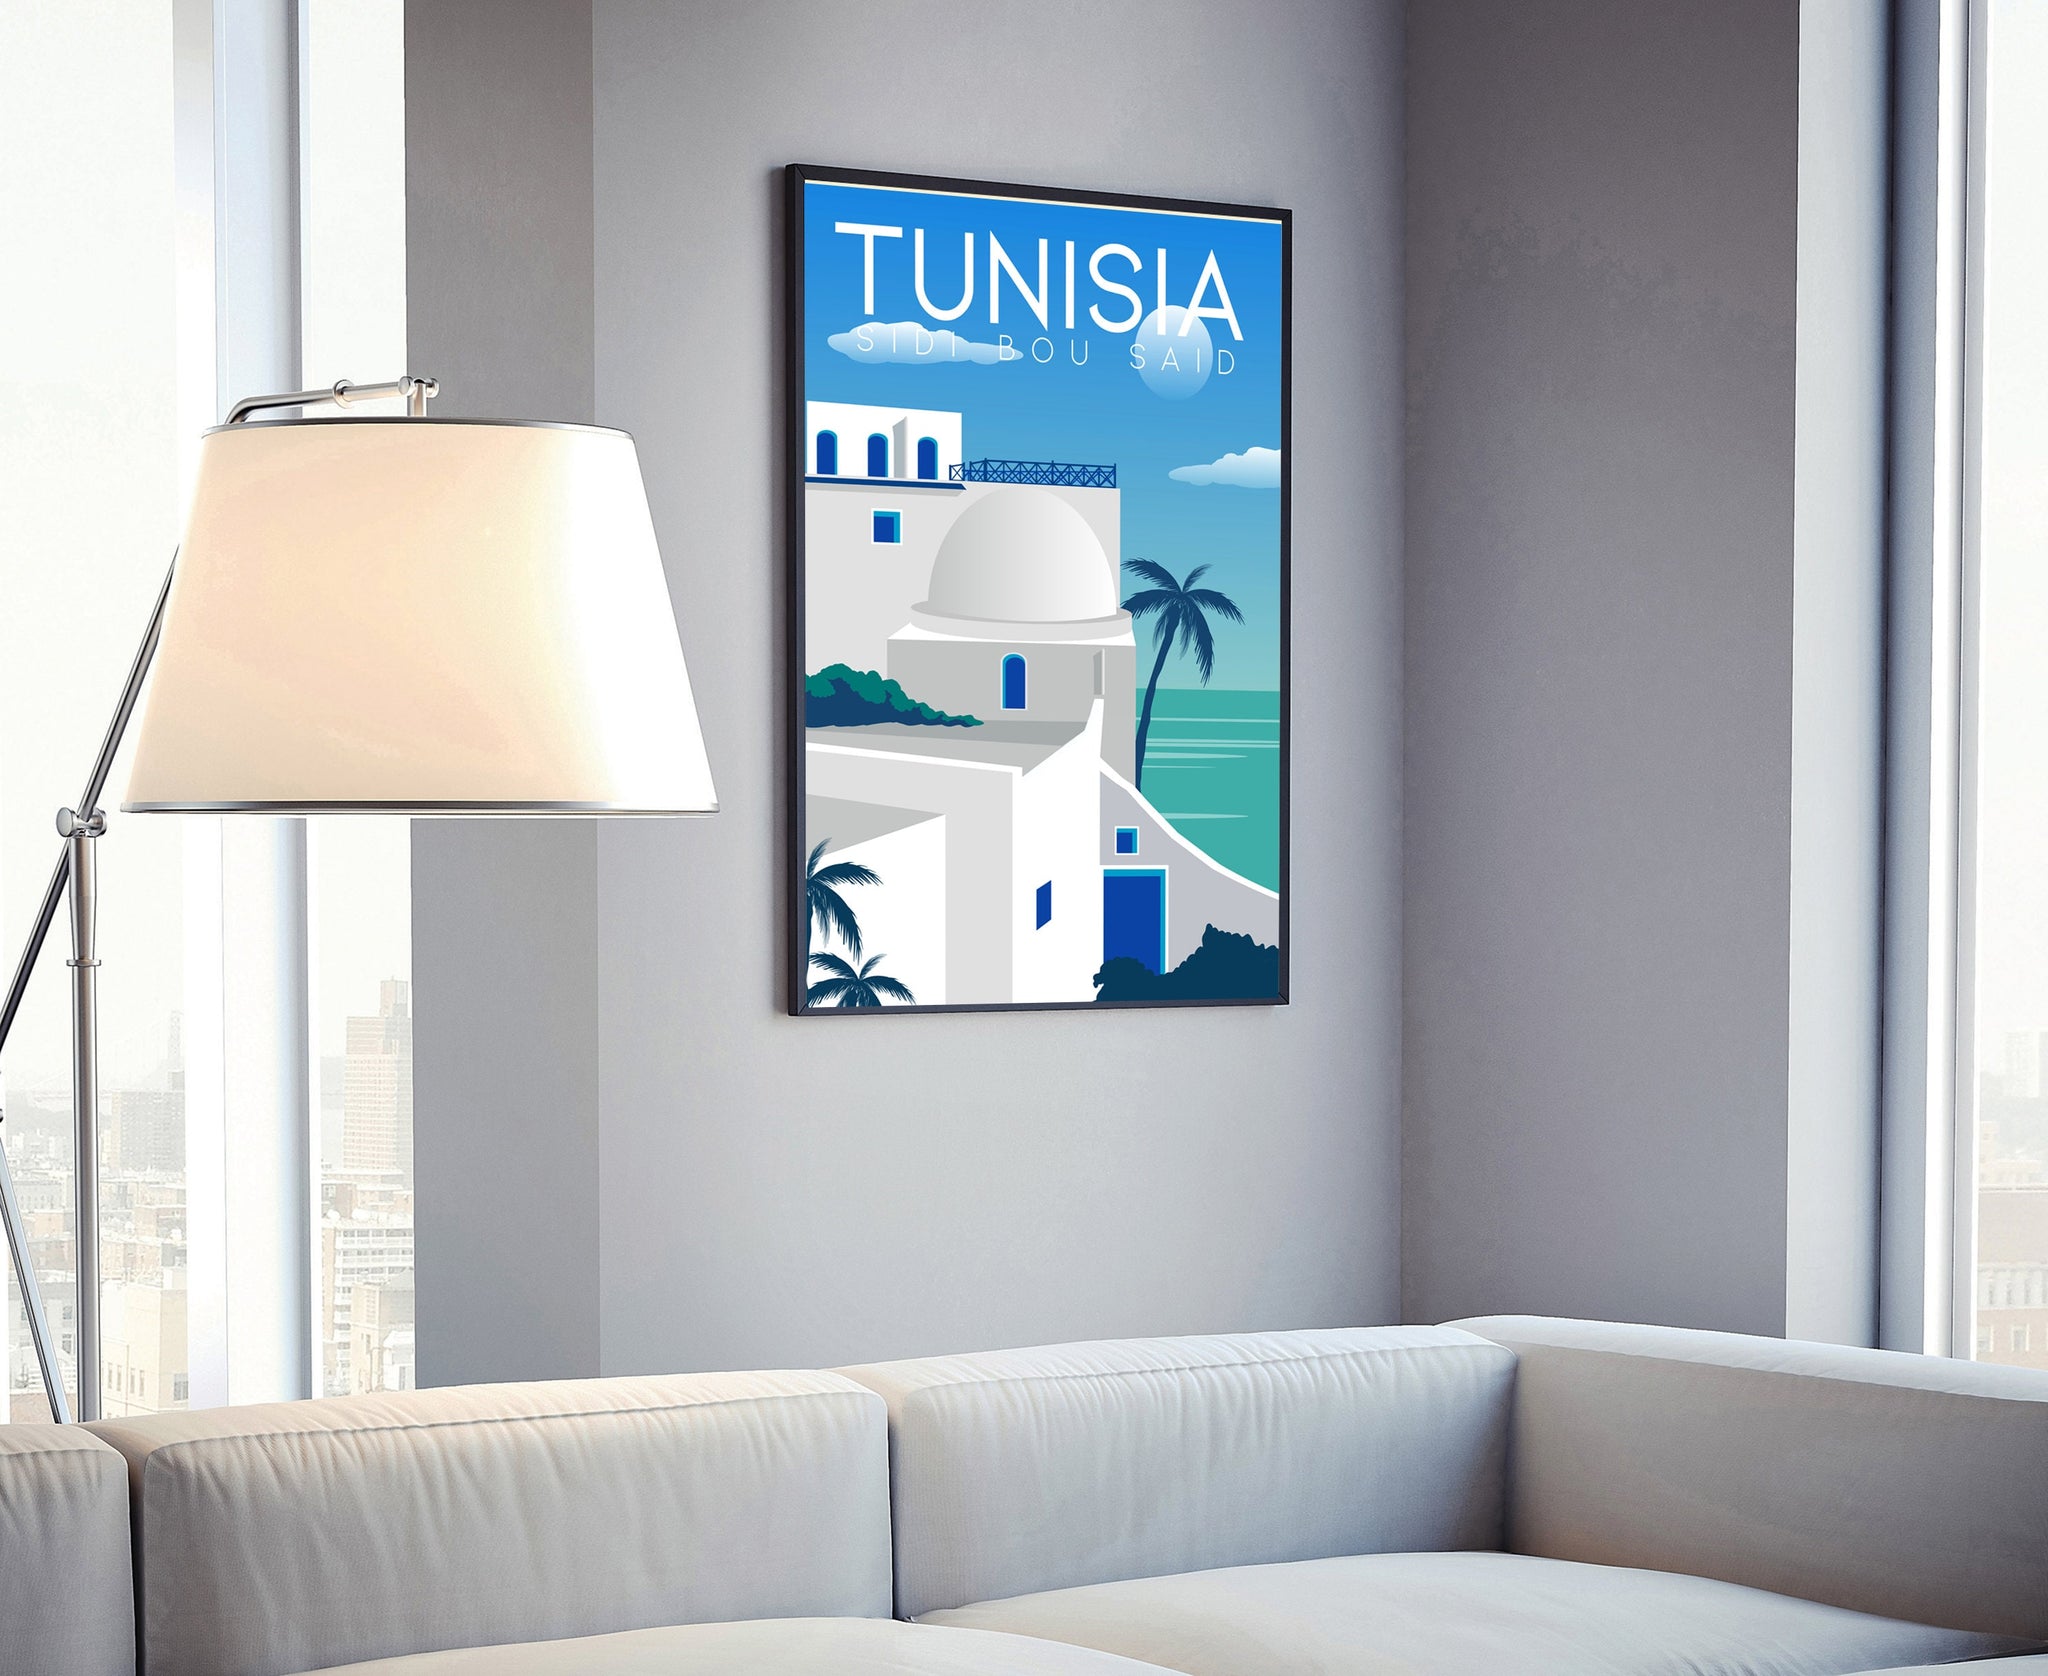 TUNISIA TRAVEL POSTER, Tunisia Cityscape and Landmark Poster Wall Art, Home Wall Art, Office Wall Decor